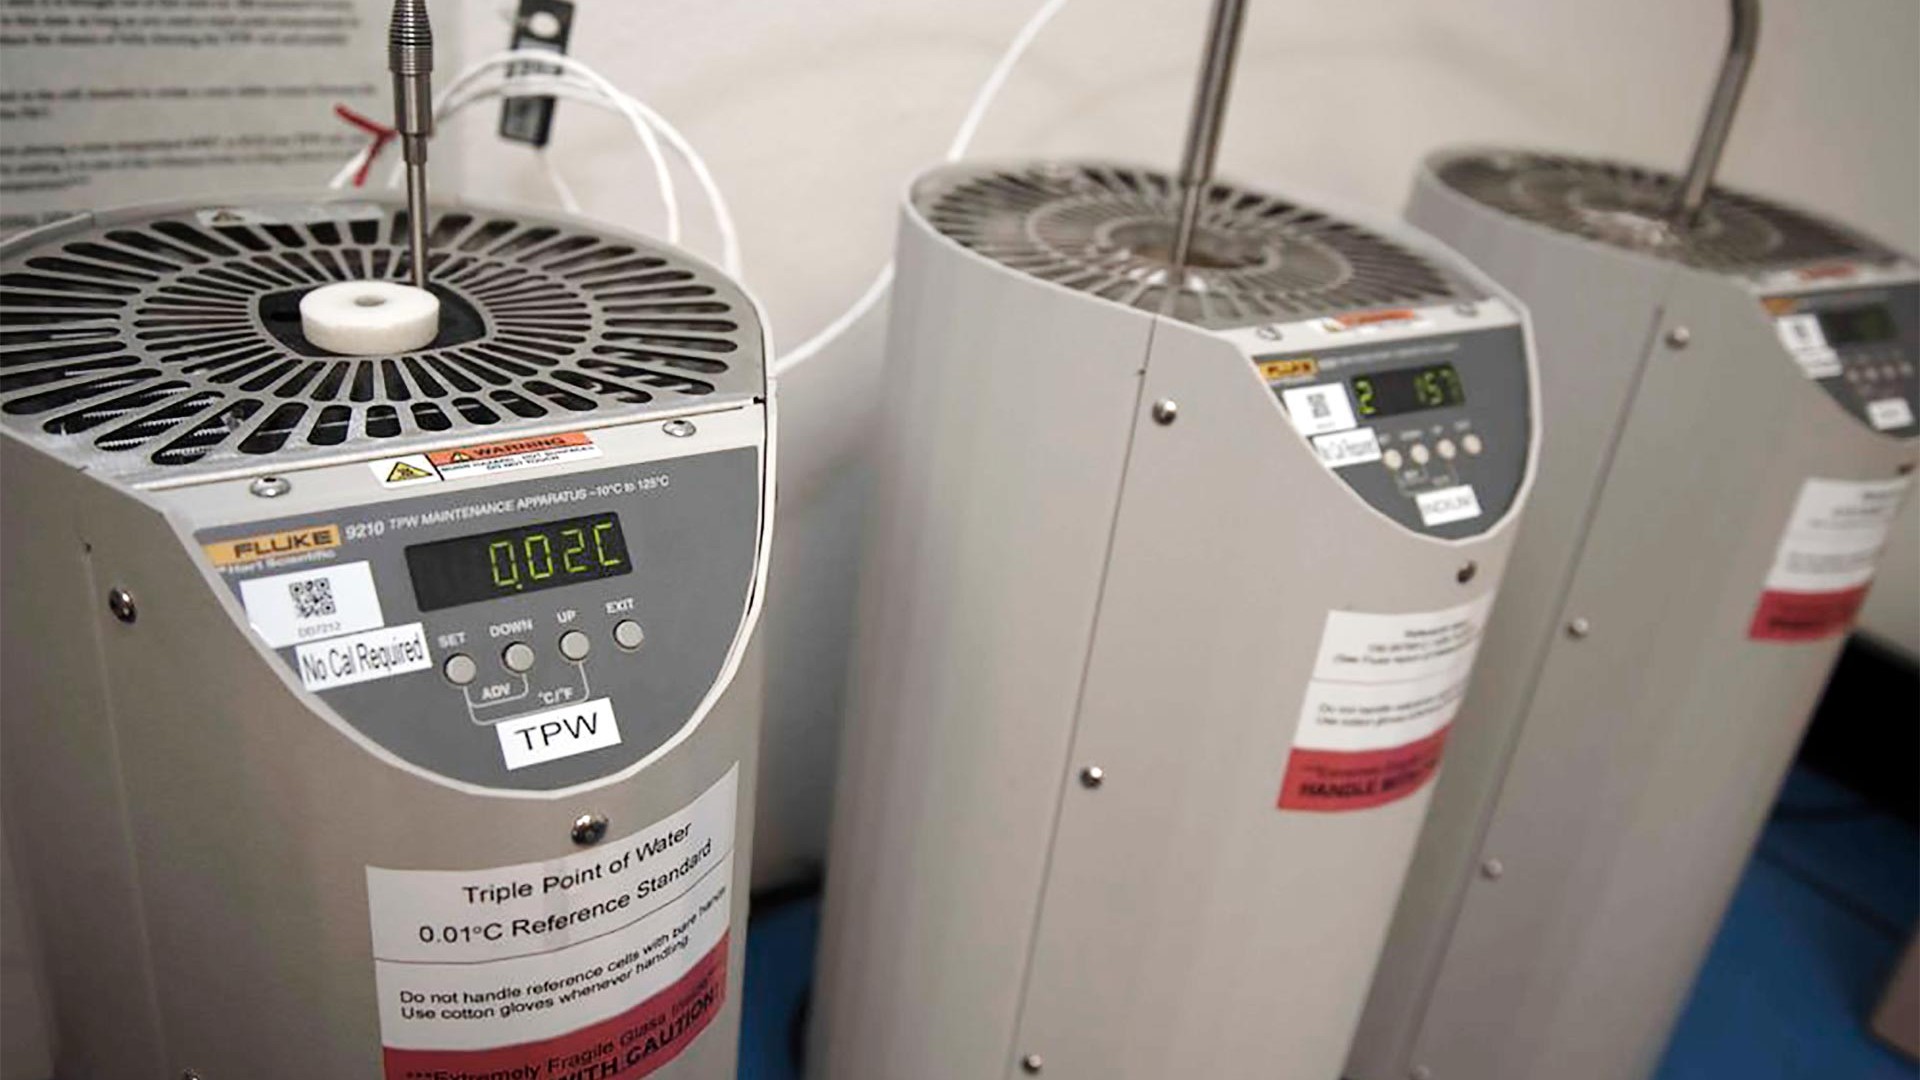 Triple point temperature calibration equipment